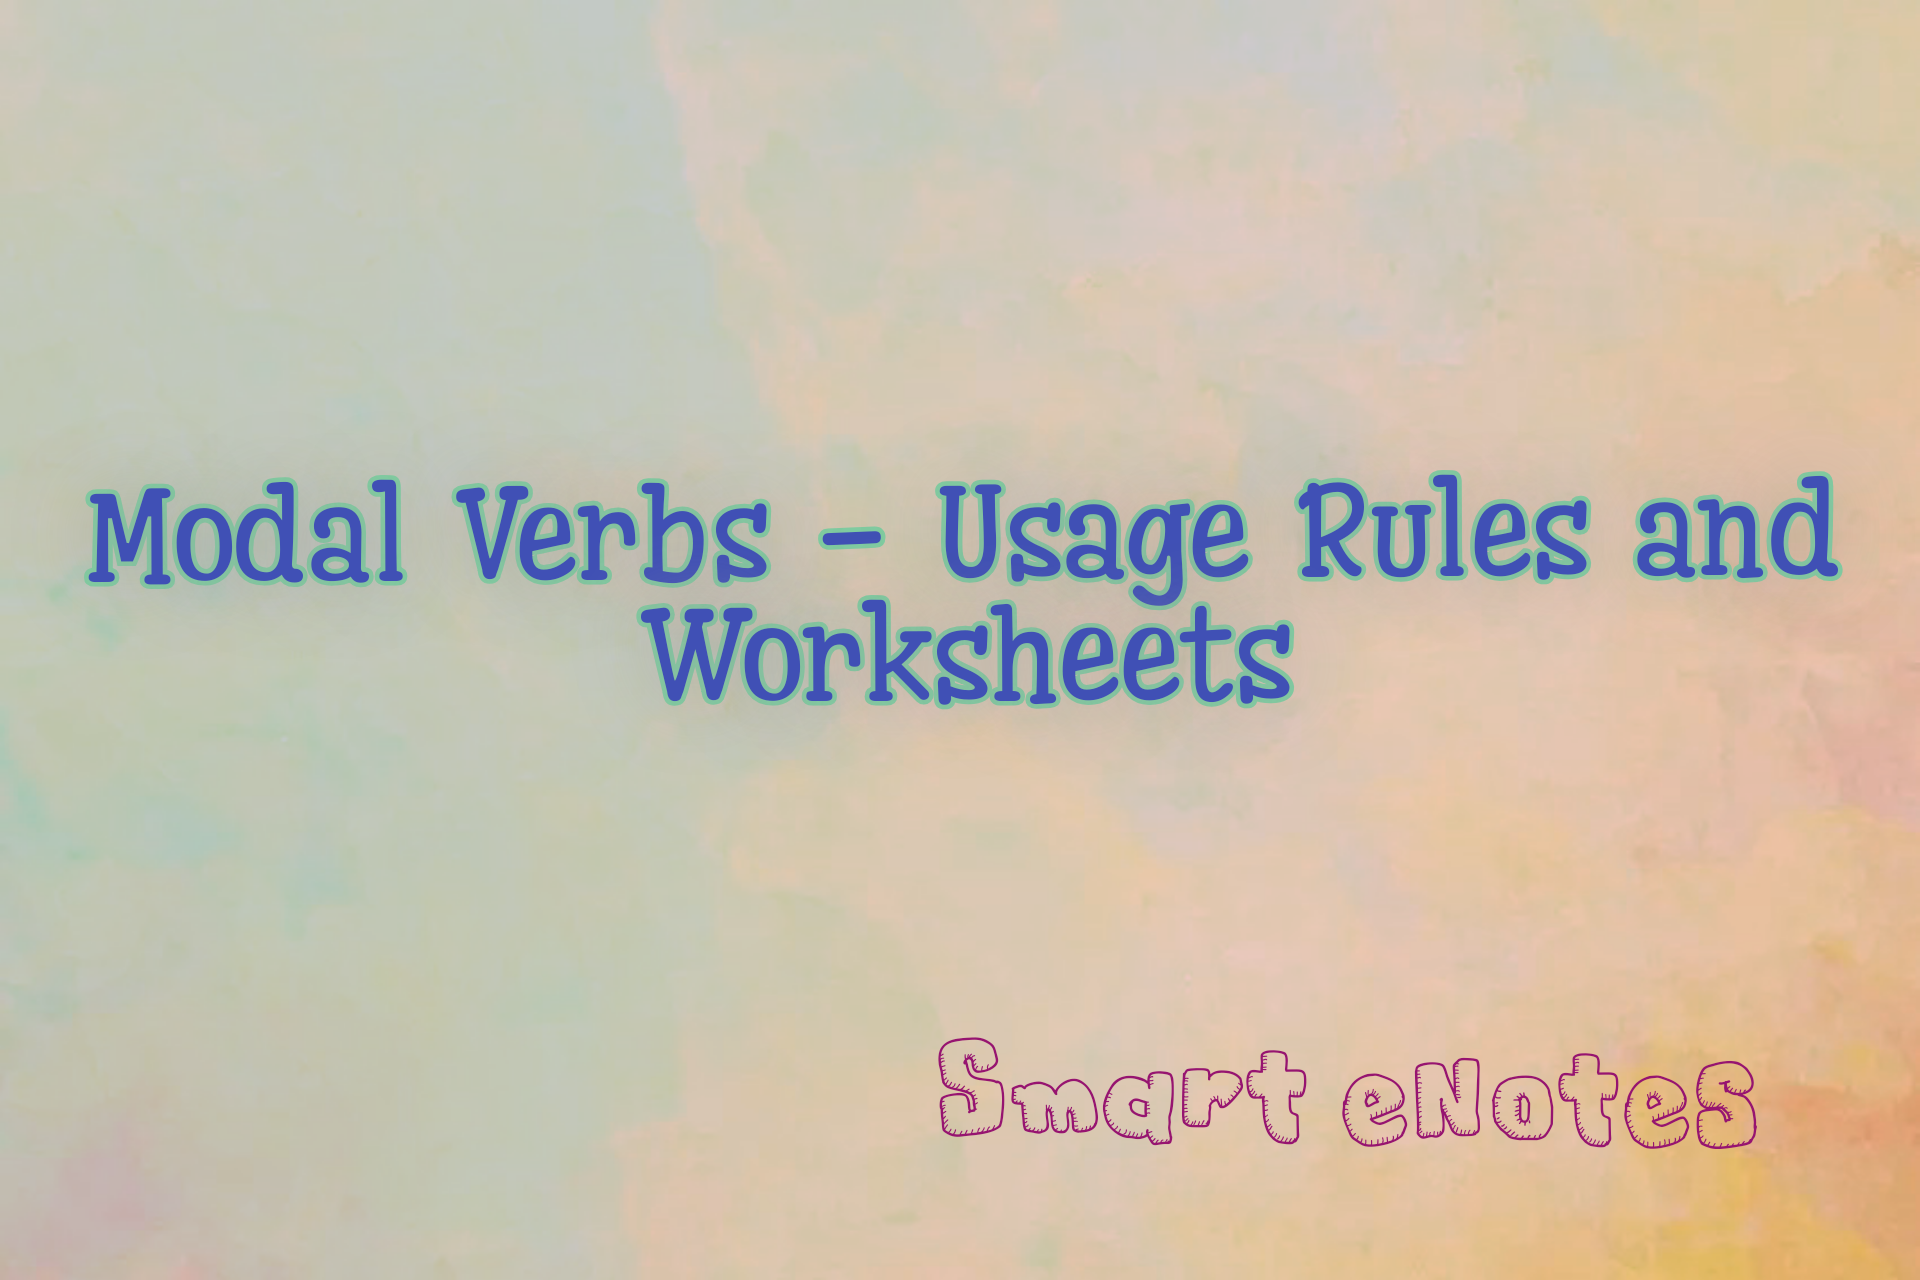 Modal Verbs: Characteristics, Usage Rules and Worksheets 1